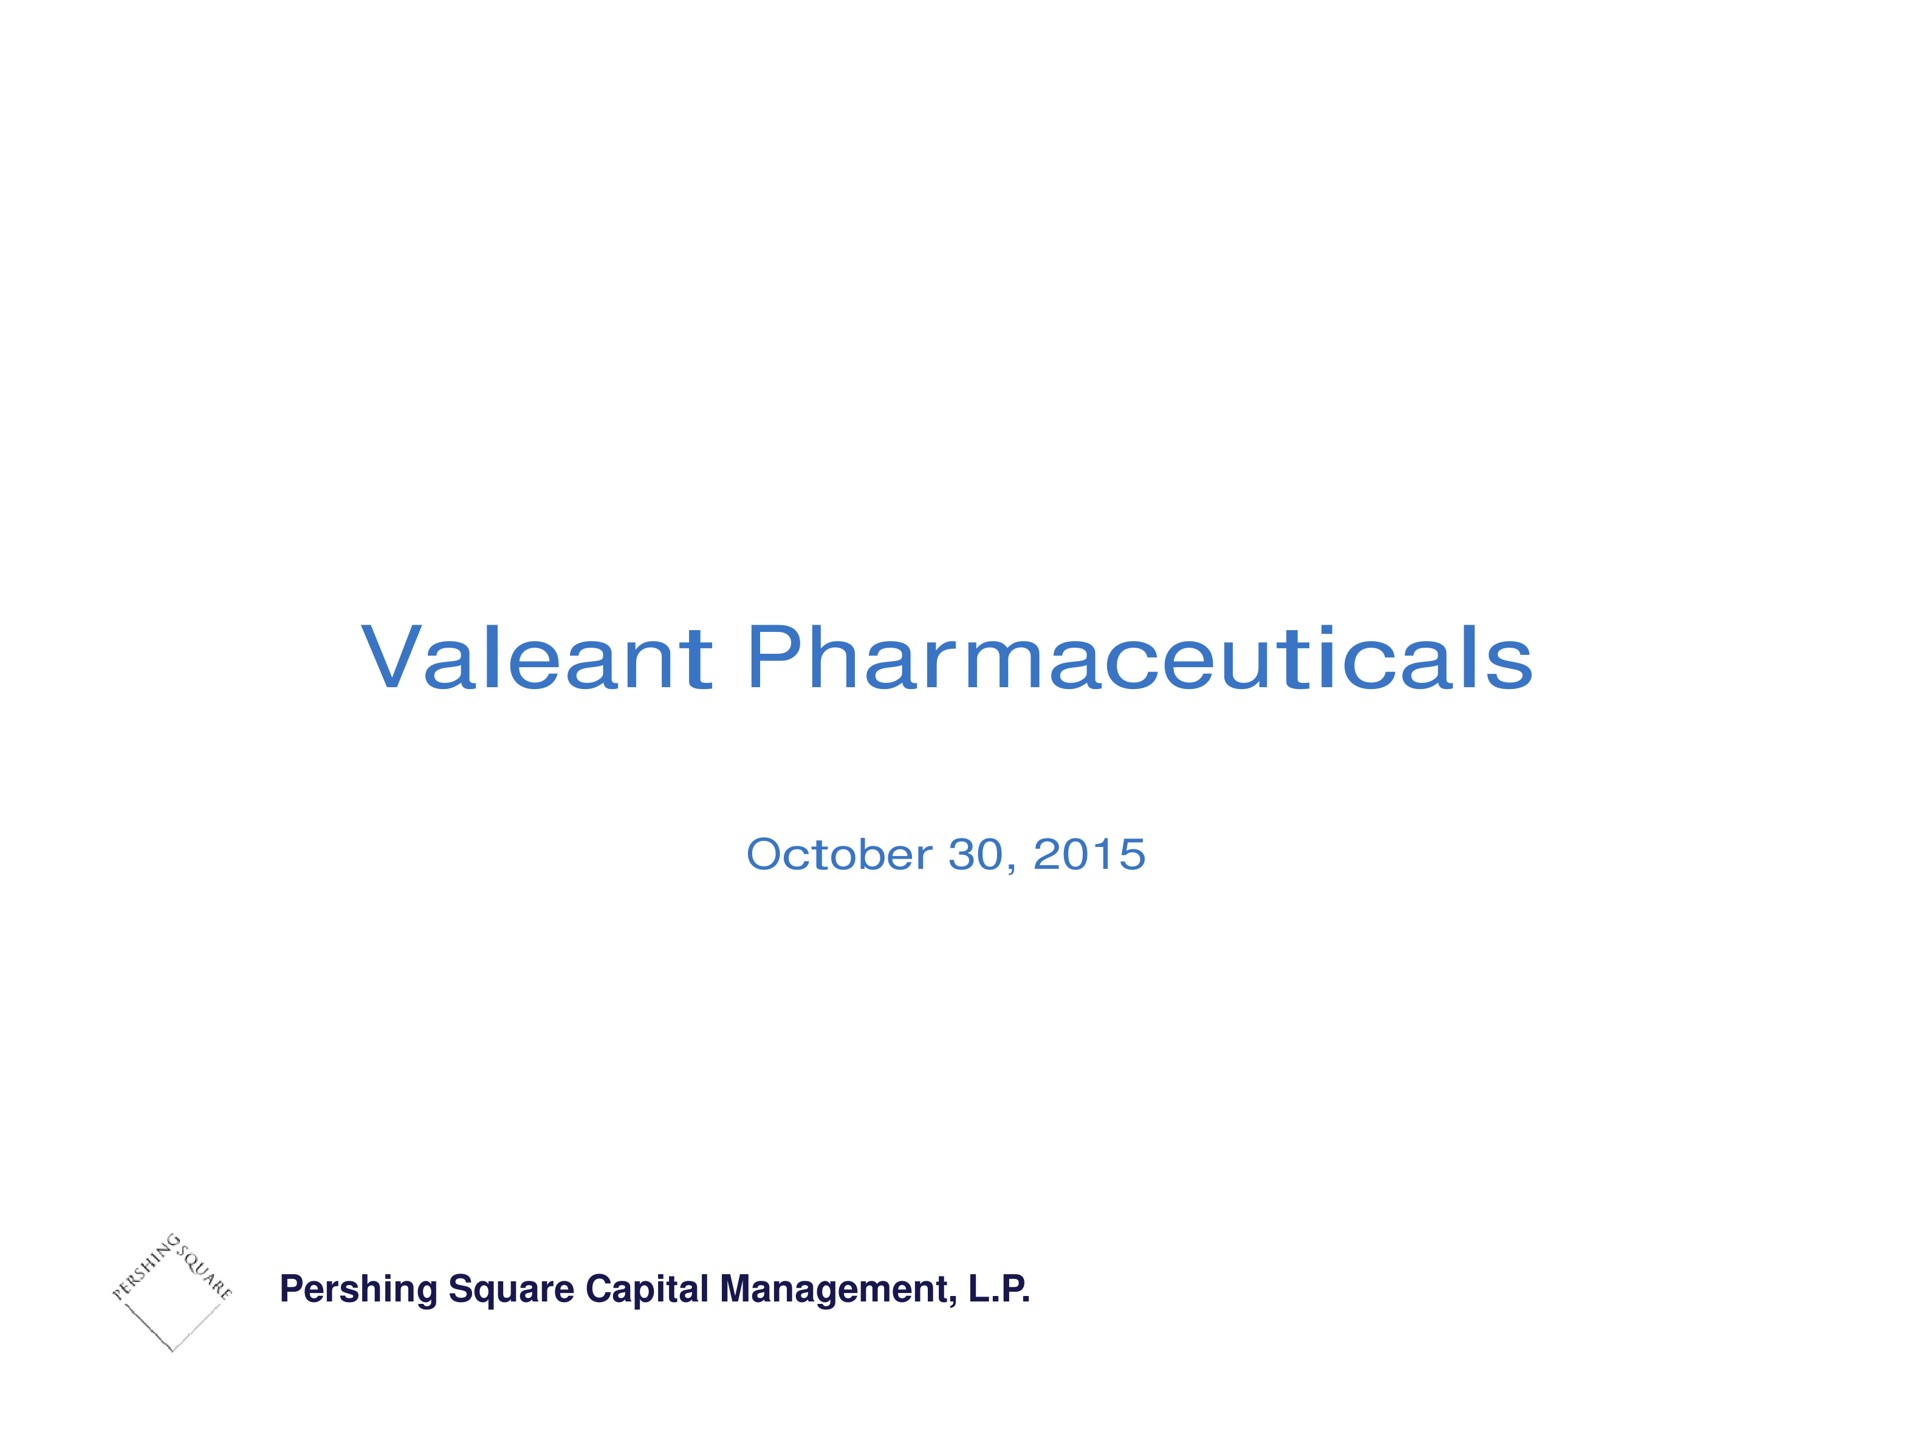 pharmaceuticals | Pershing Square